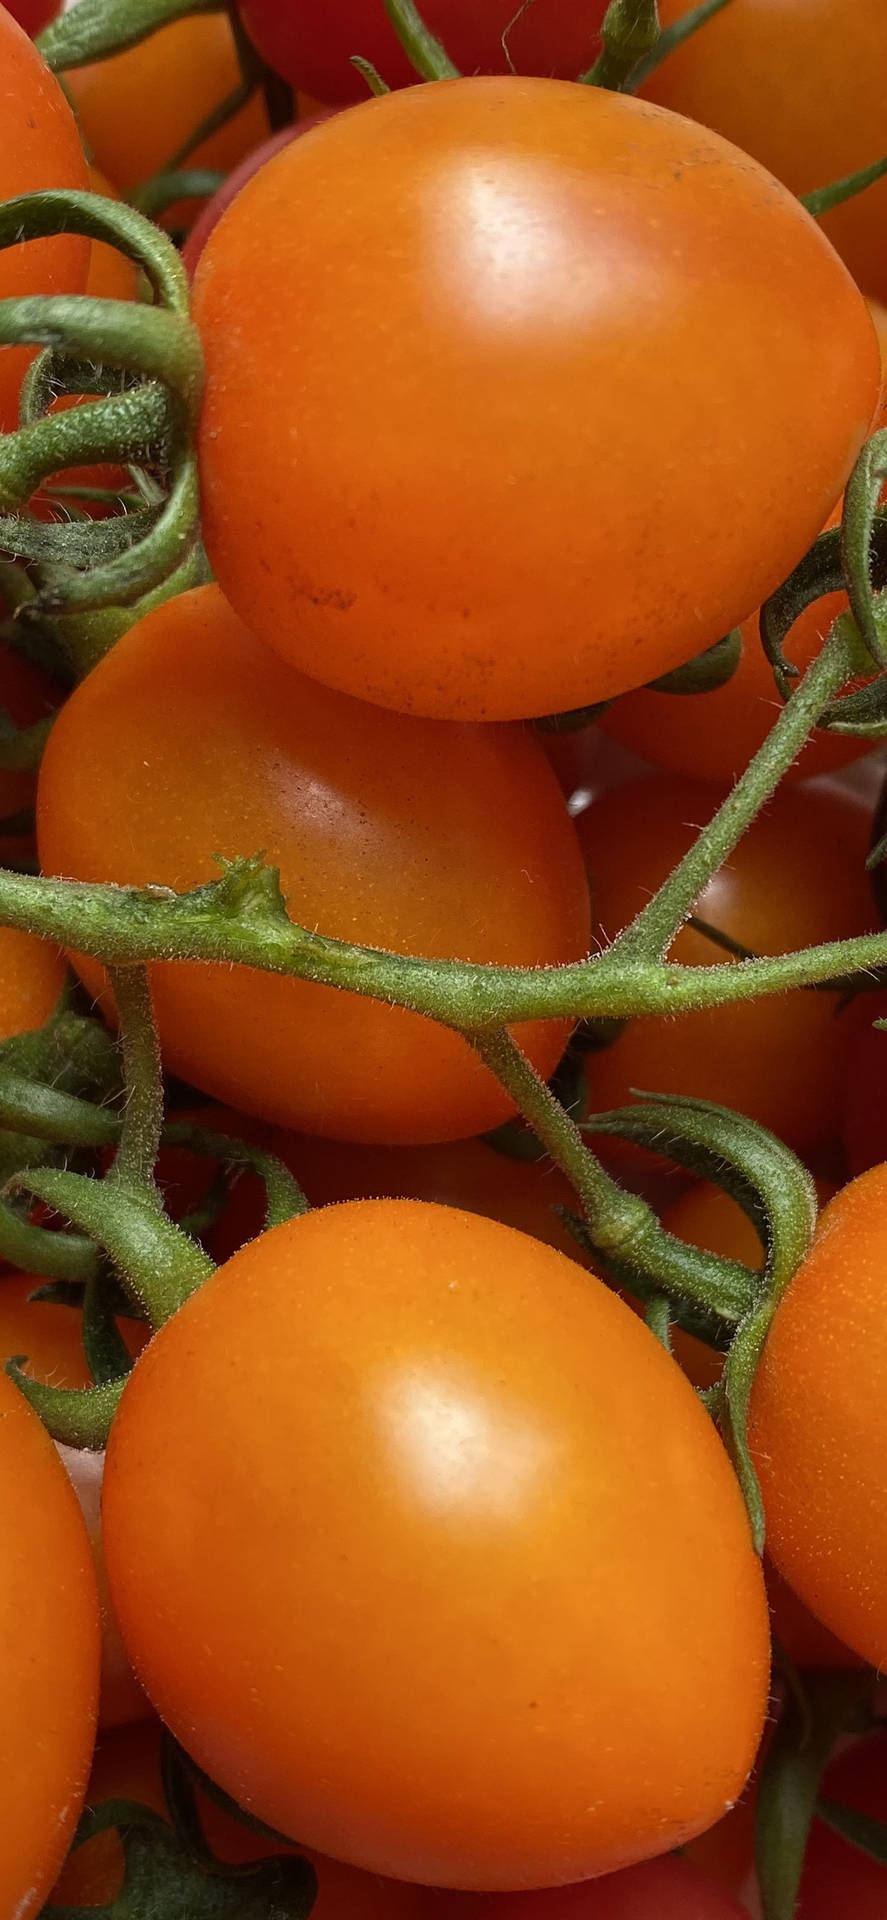 Friske Orange Tomater Wallpaper